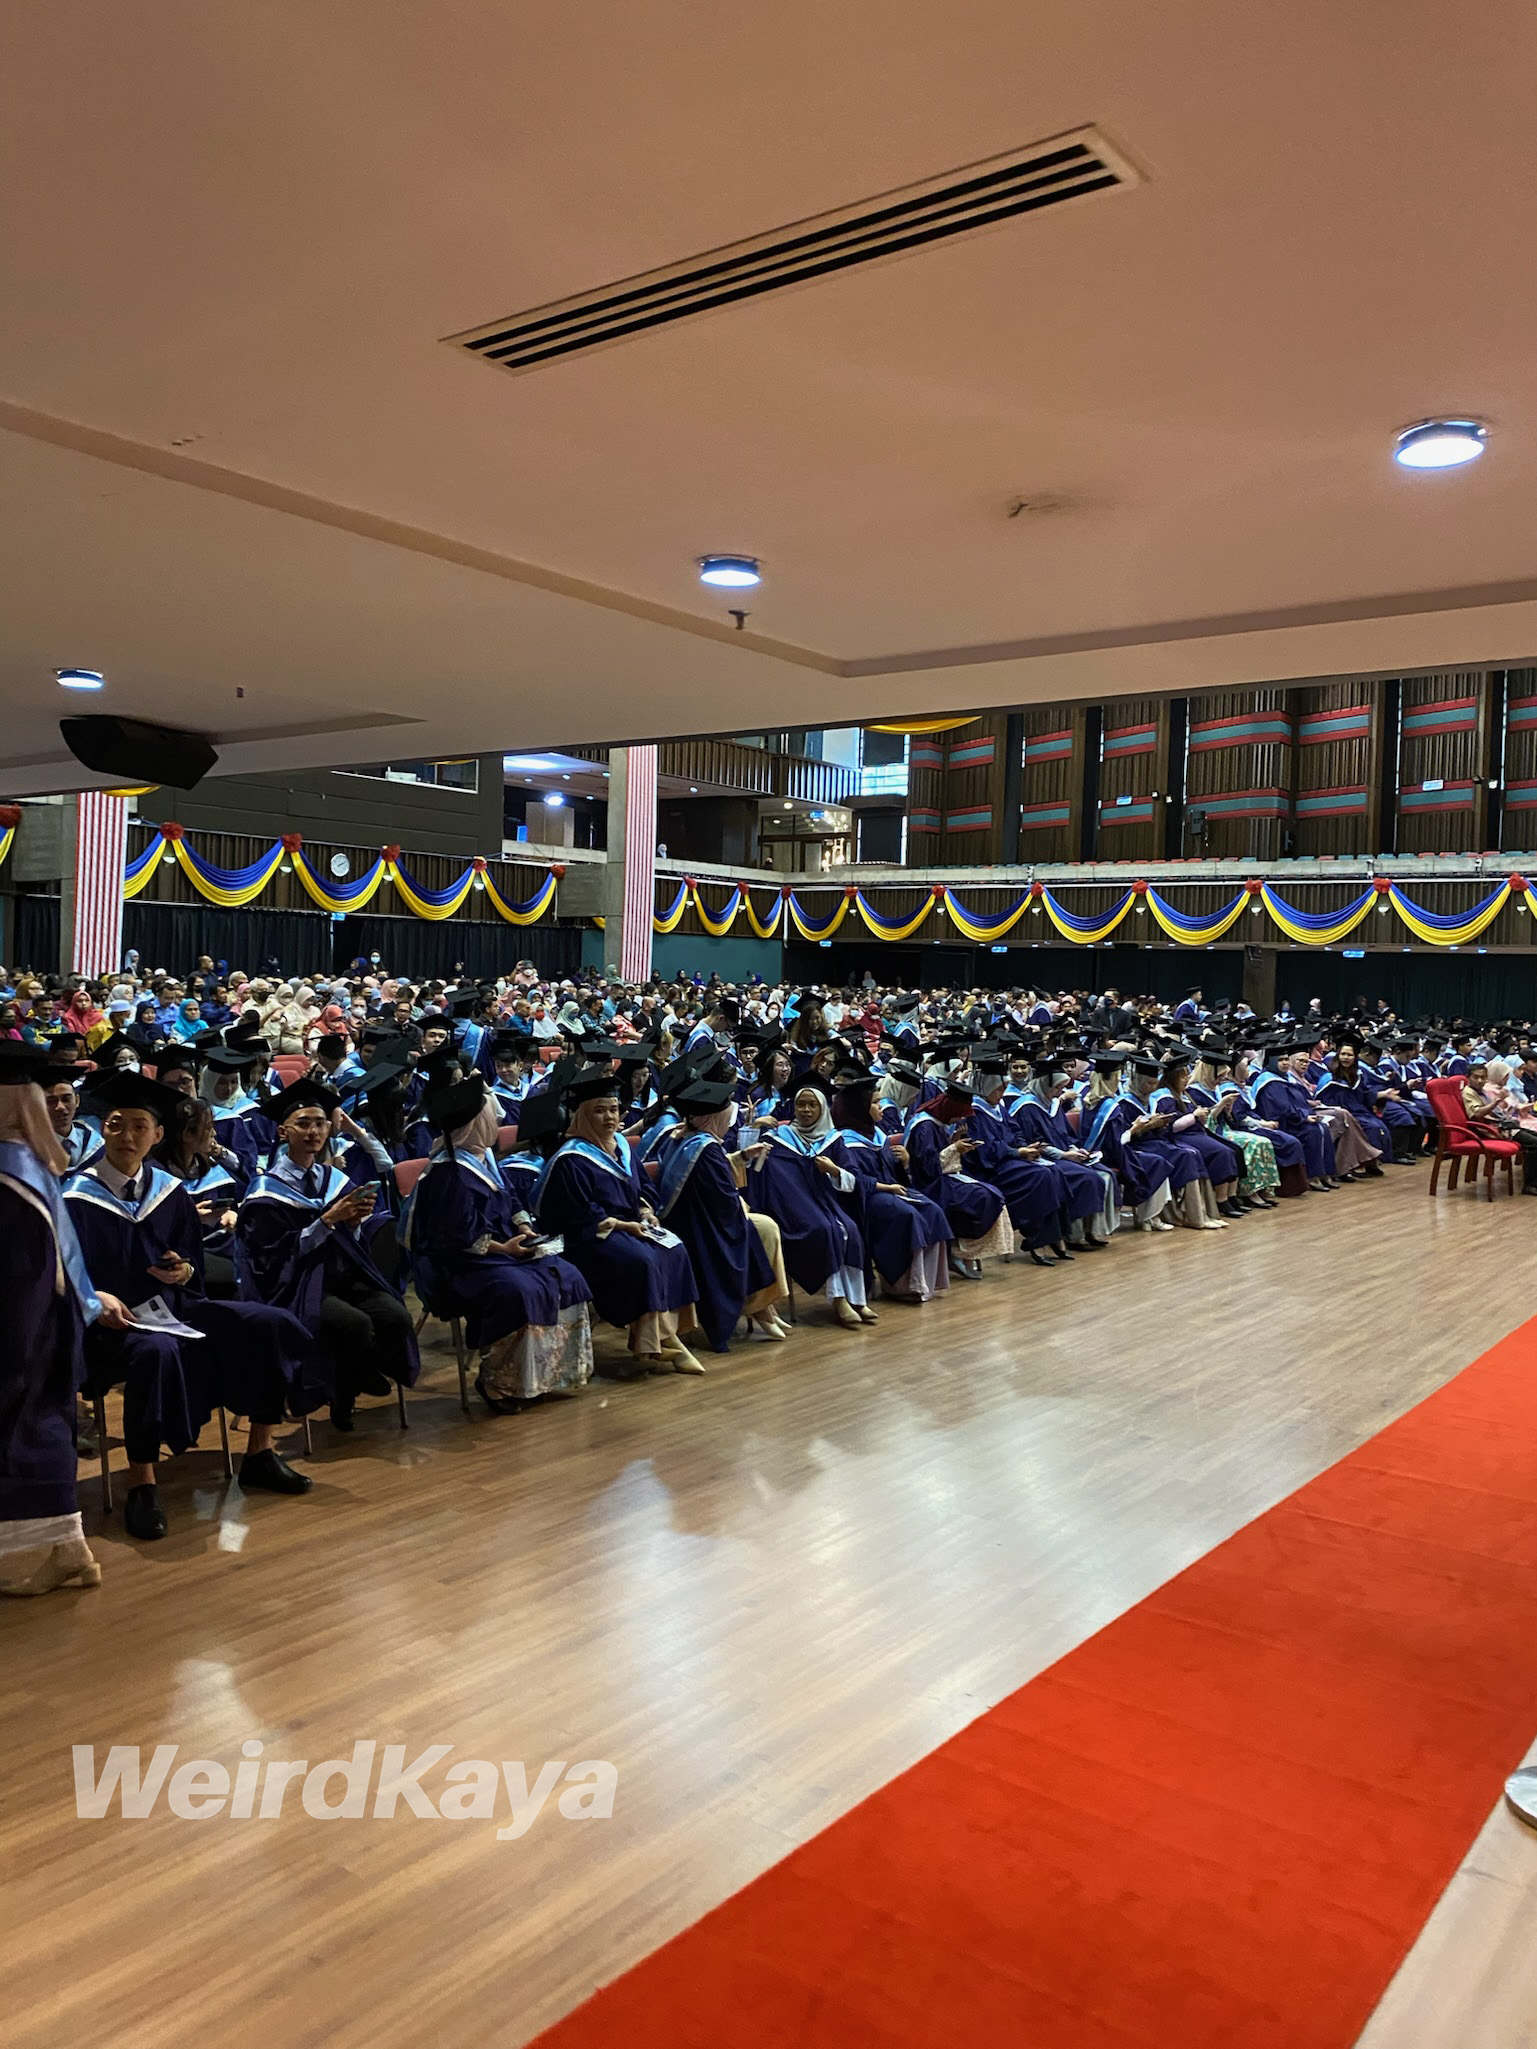 Dewan canselor universiti malaya convocation ceremony